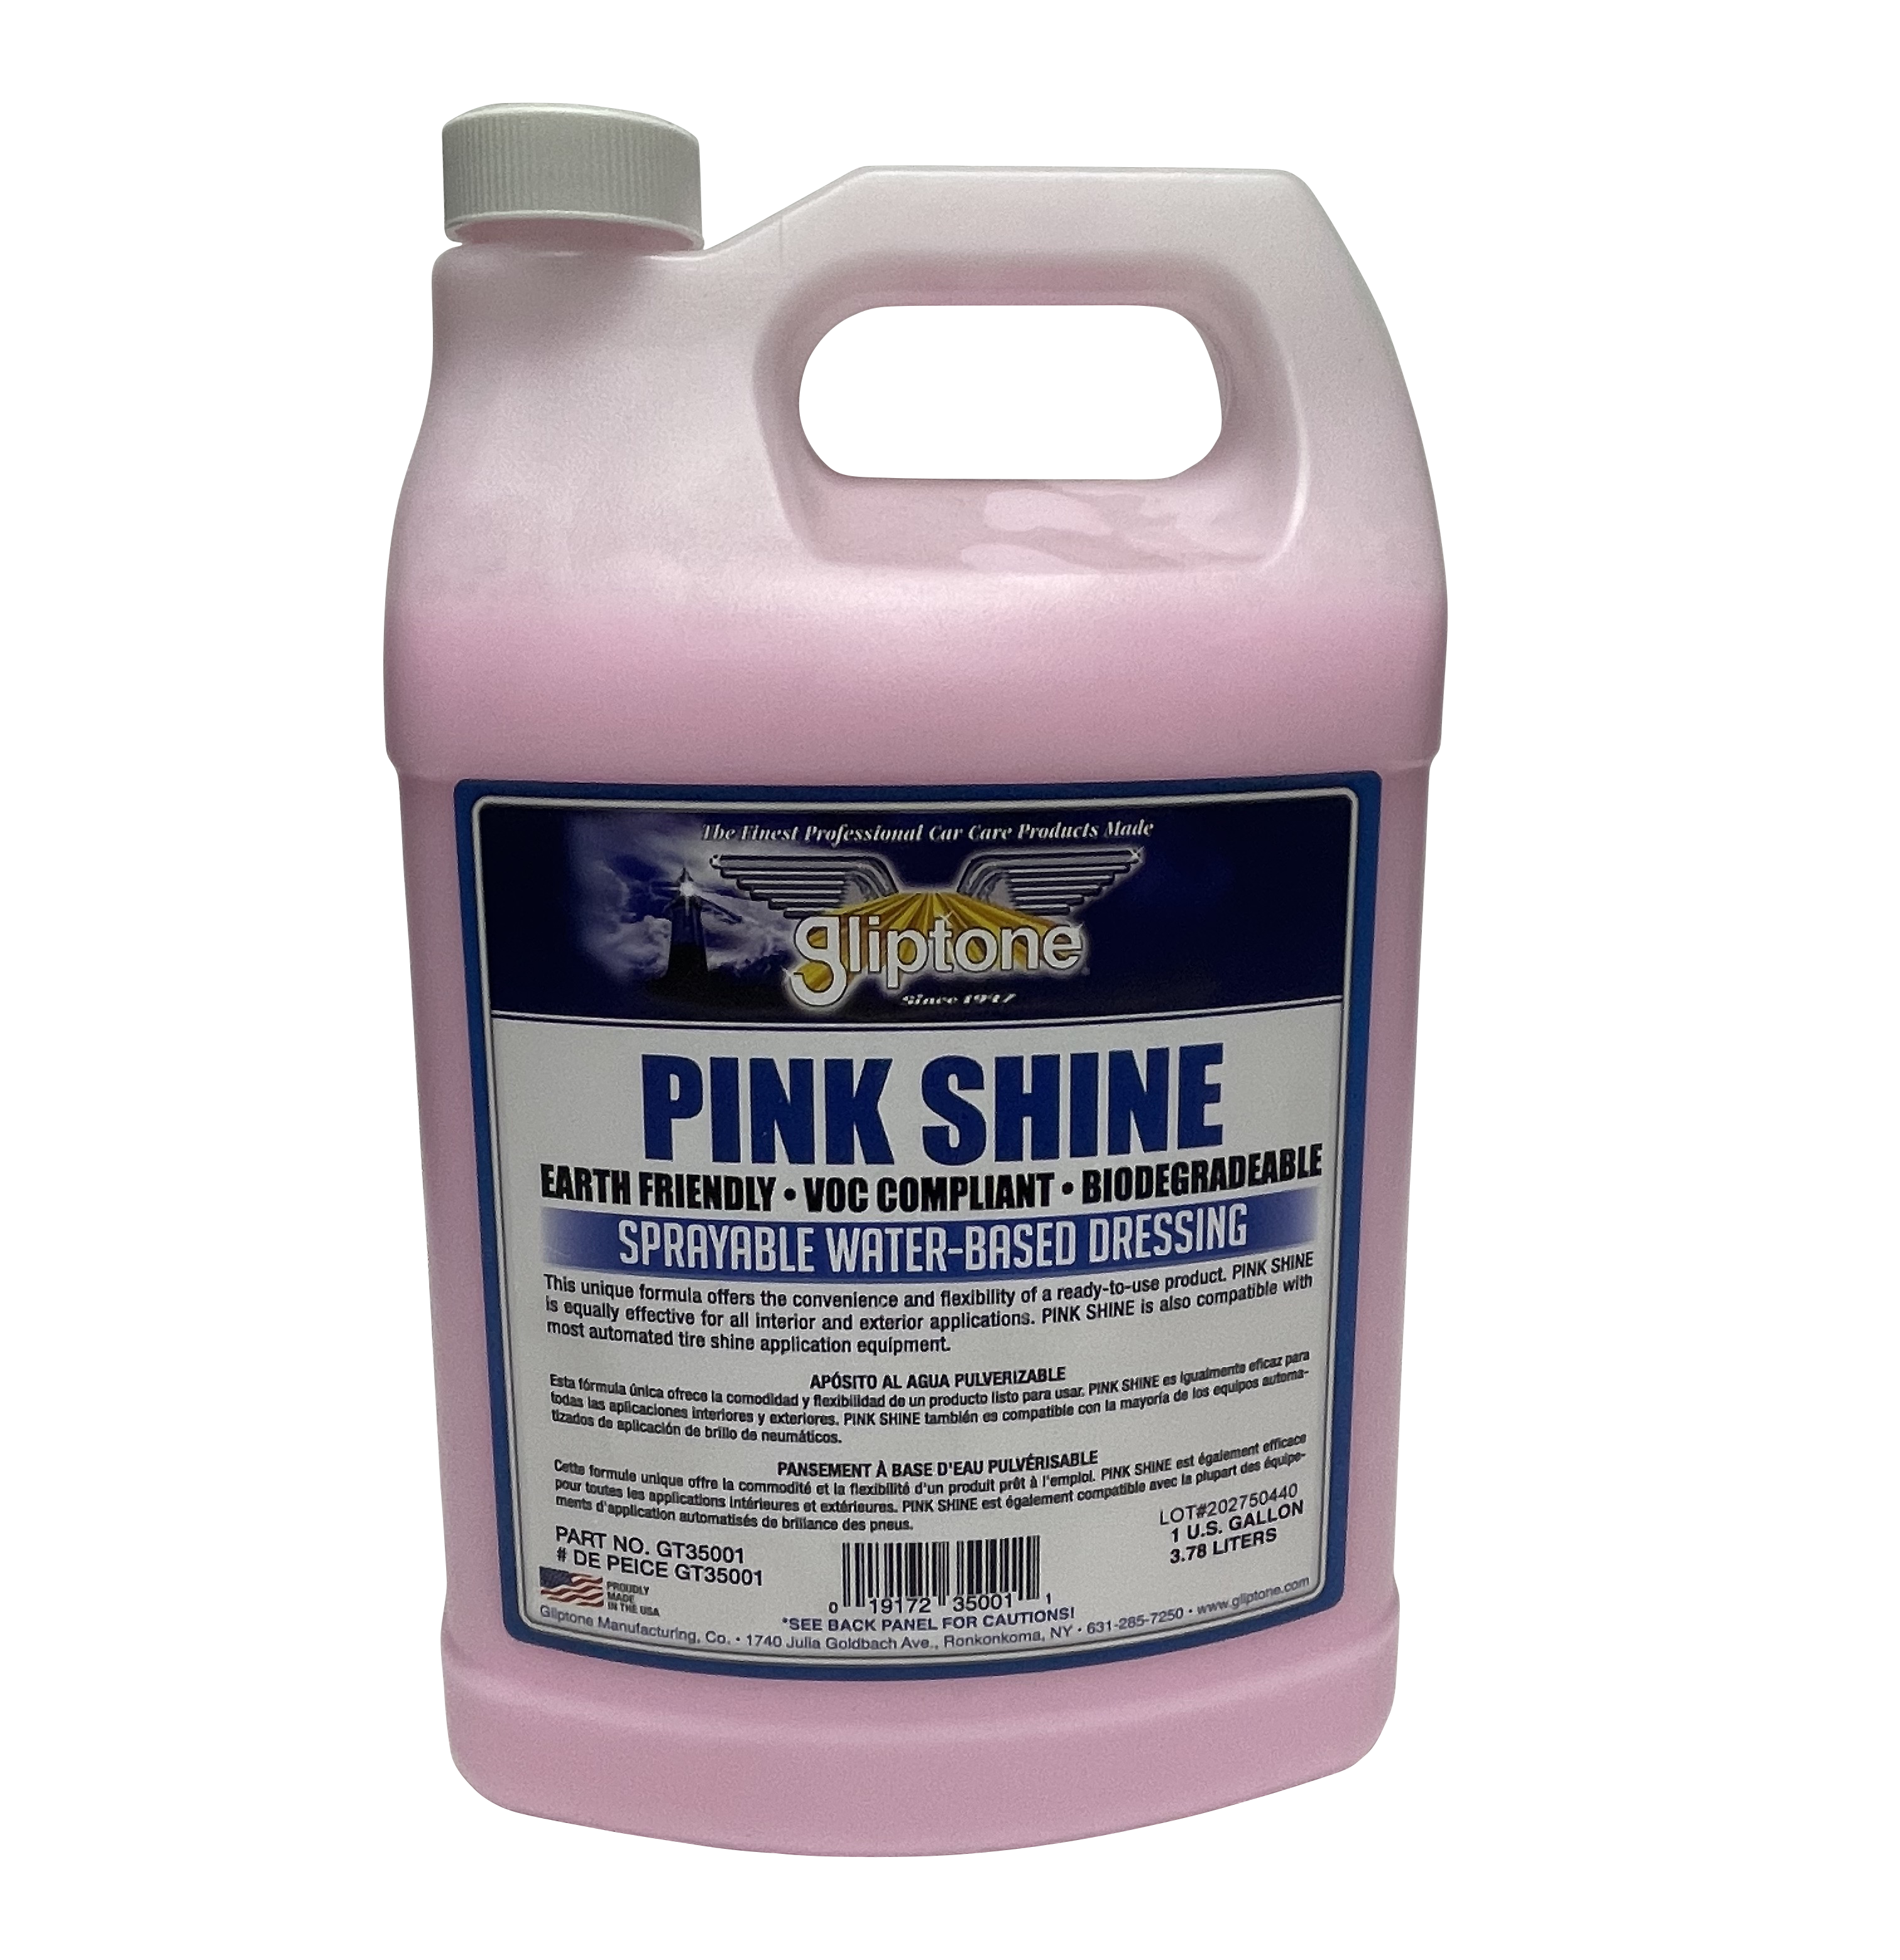 Pink Shine Sprayable Water Based Dressing